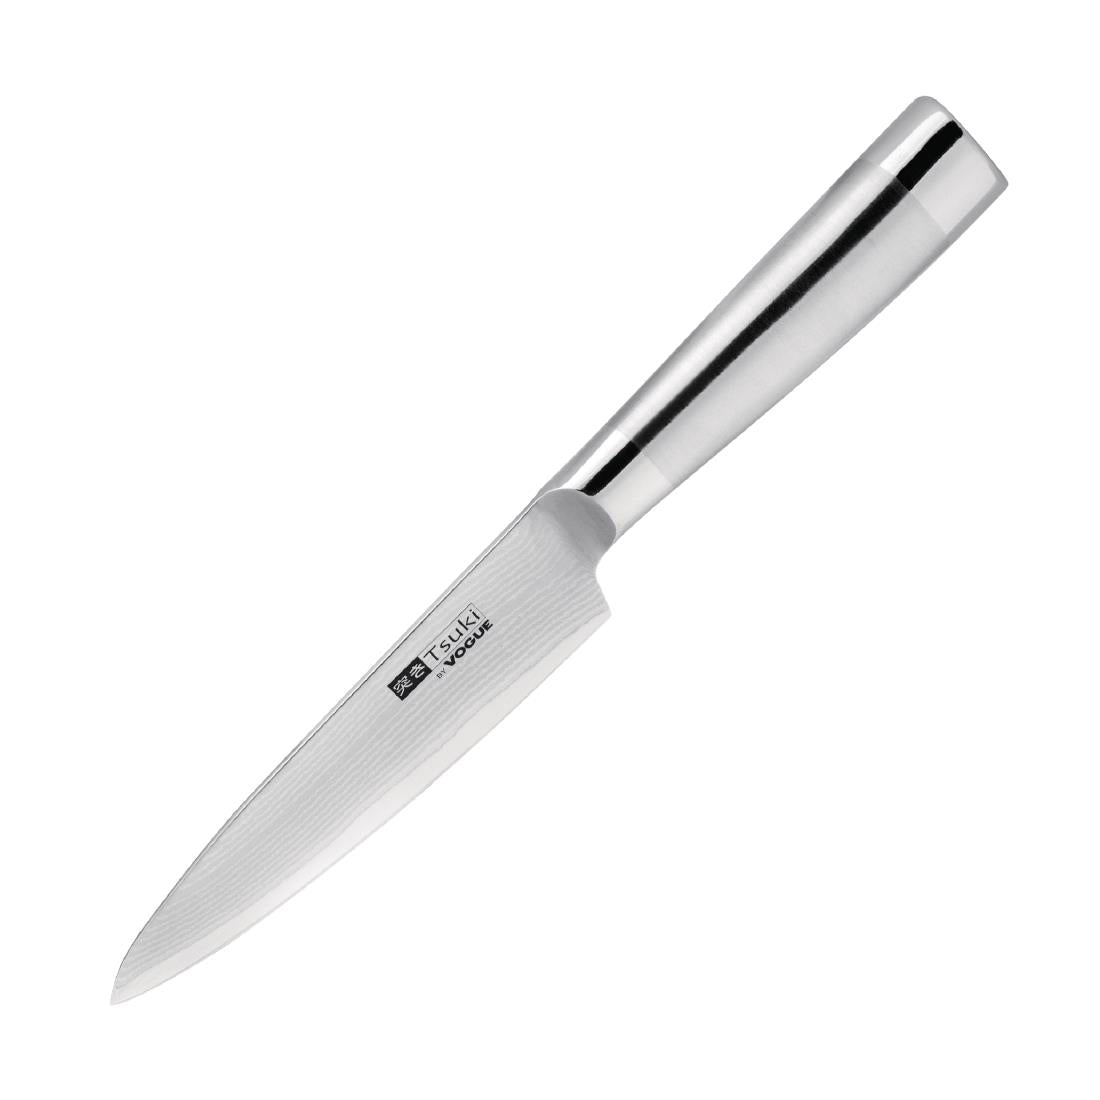 DA442 Tsuki Series 8 Utility Knife 12.5cm JD Catering Equipment Solutions Ltd